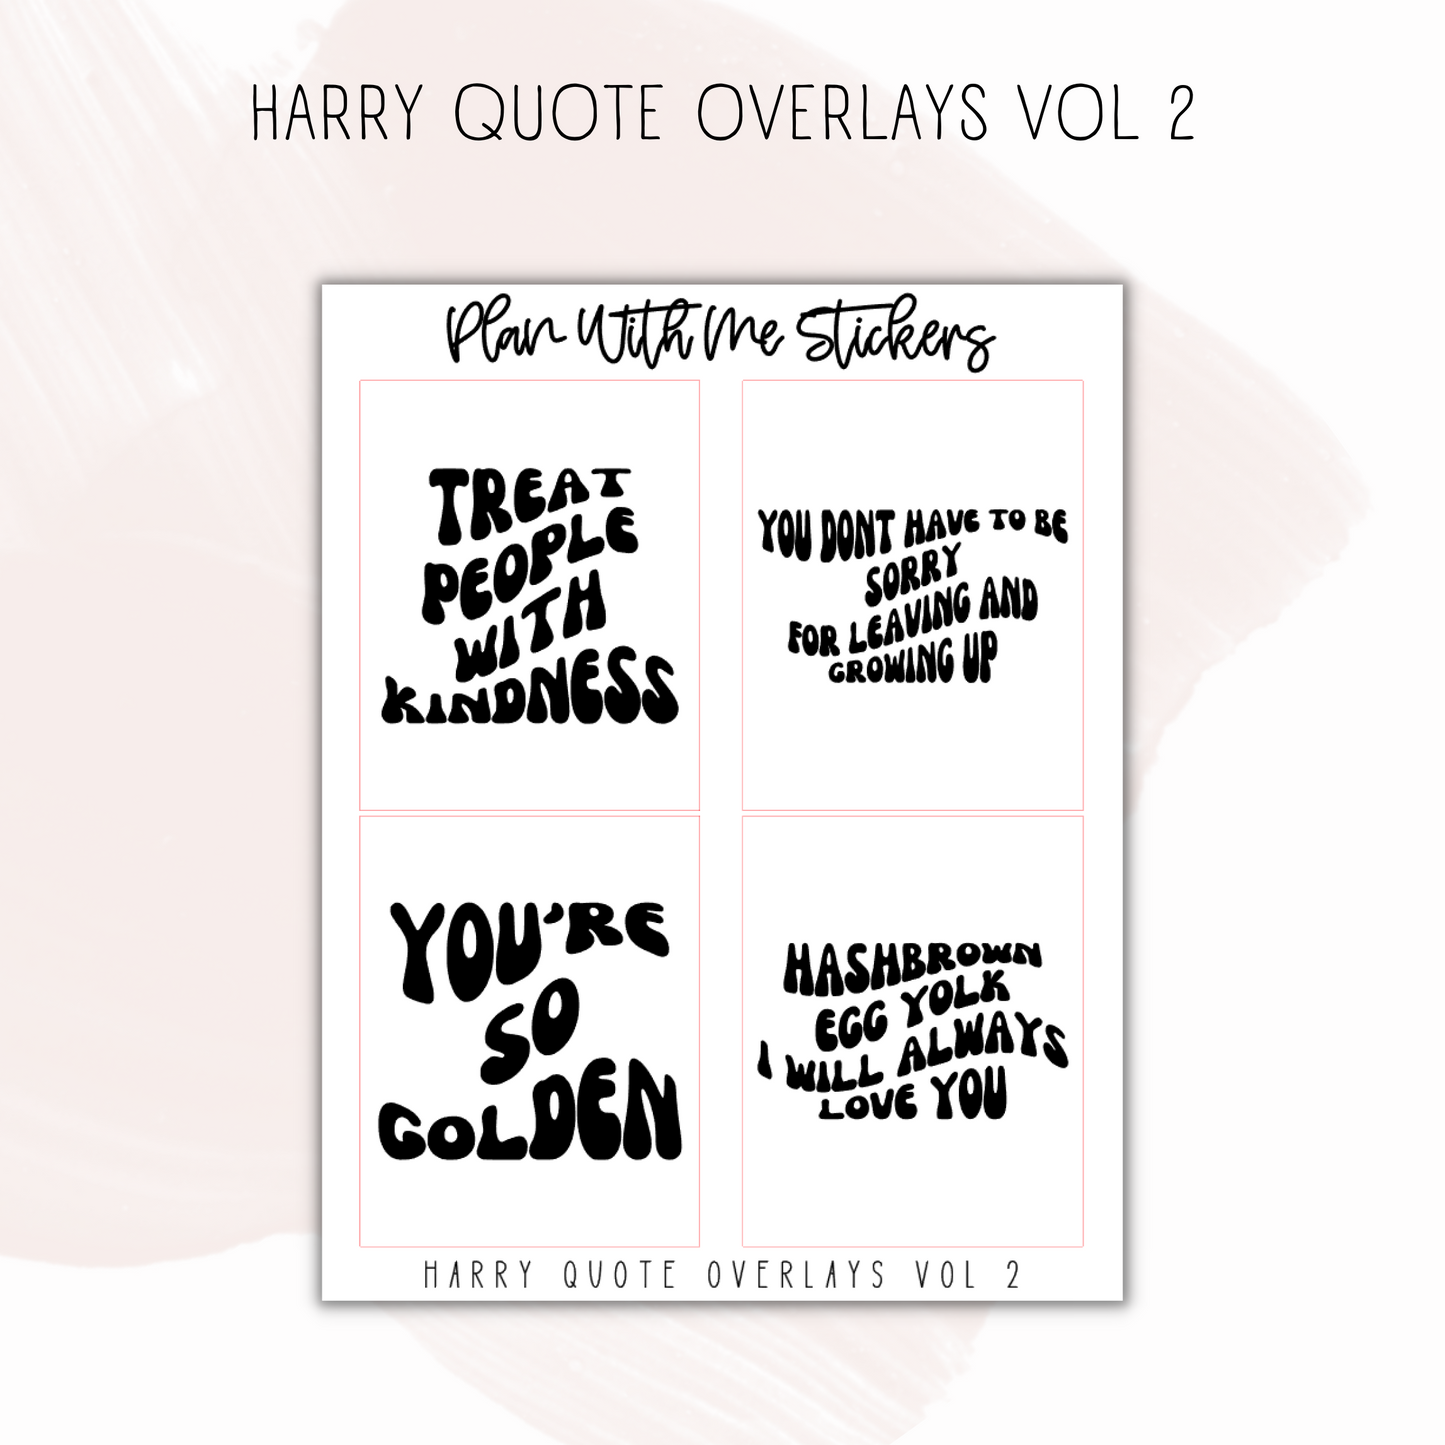 Harry Quote Overlays Vol 2